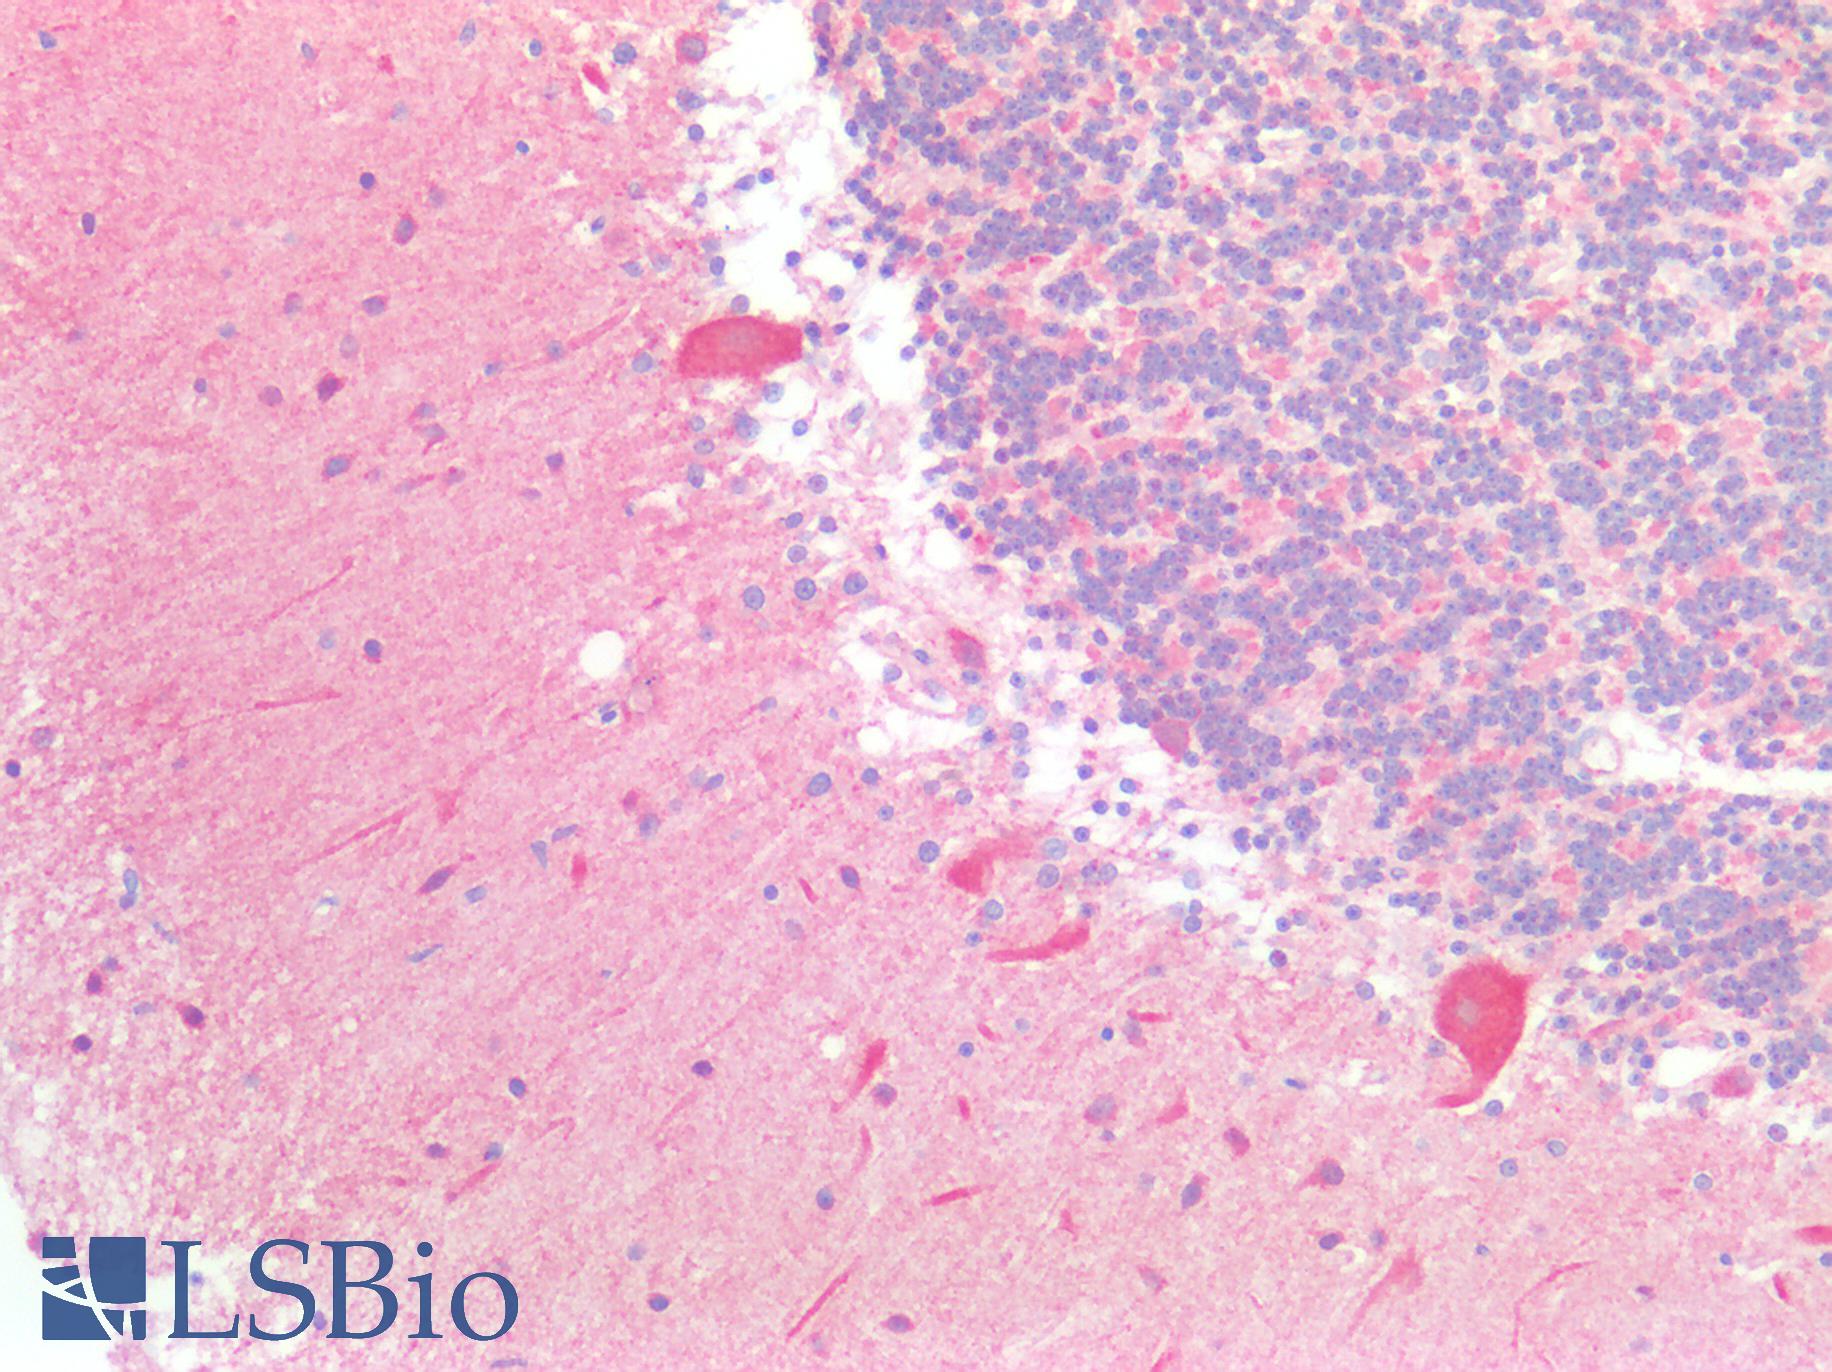 BCKDHA / BCKDE1A Antibody - Human Brain, Cerebellum: Formalin-Fixed, Paraffin-Embedded (FFPE)